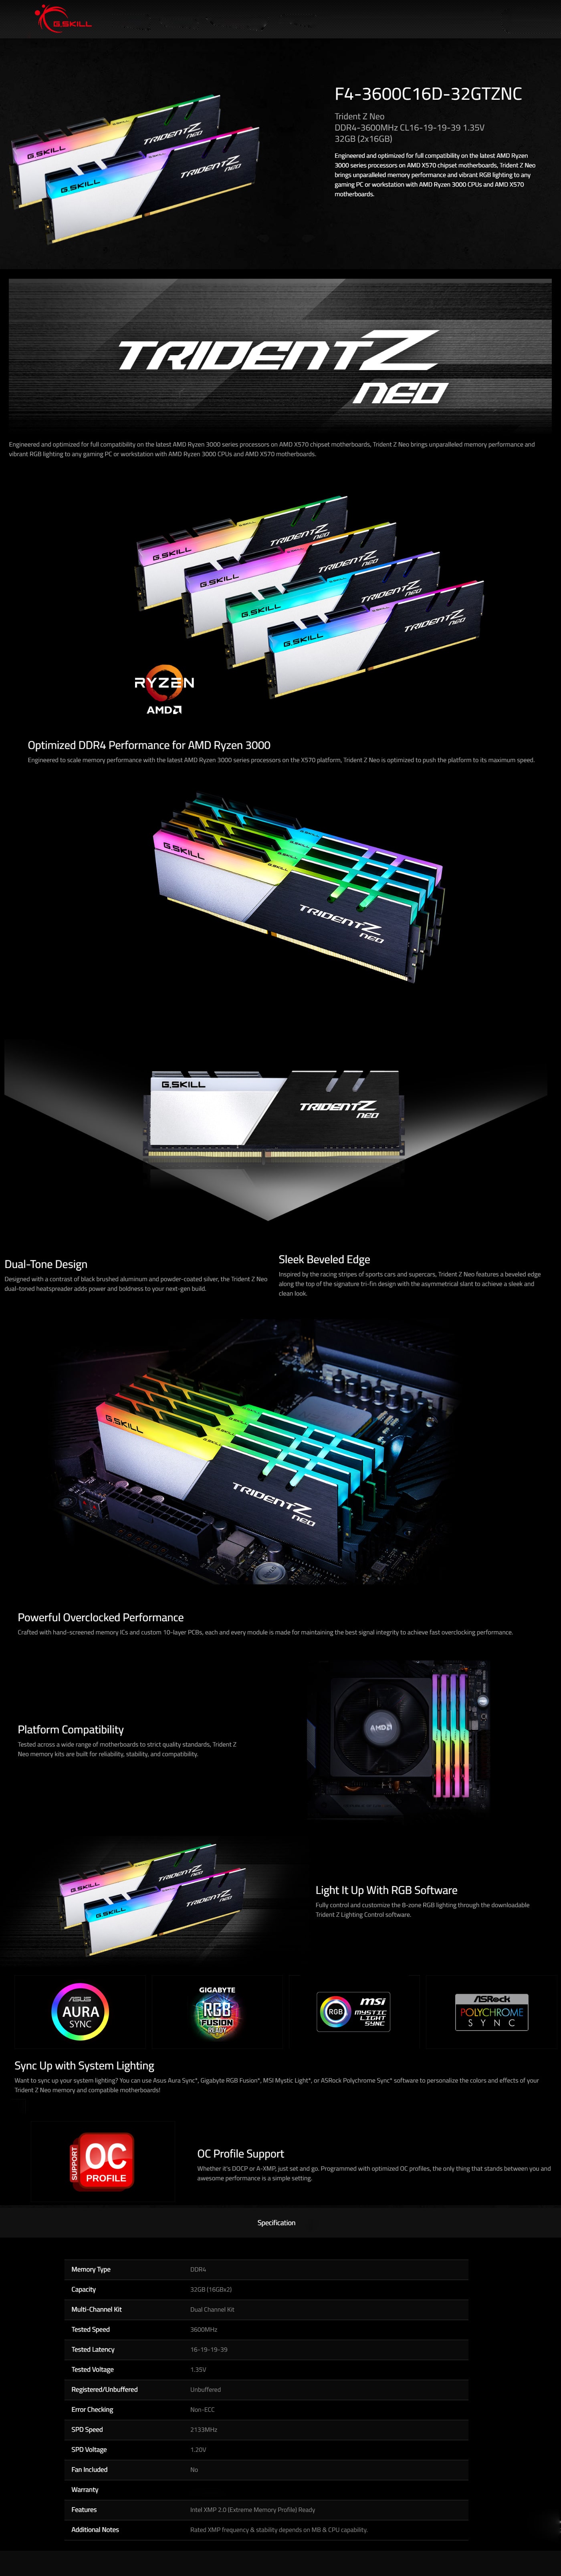 Buy Online G.skill Trident Z Neo 32GB (2 x 16GB) DDR4 3600MHz Desktop RAM (F4-3600C16D-32GTZNC)